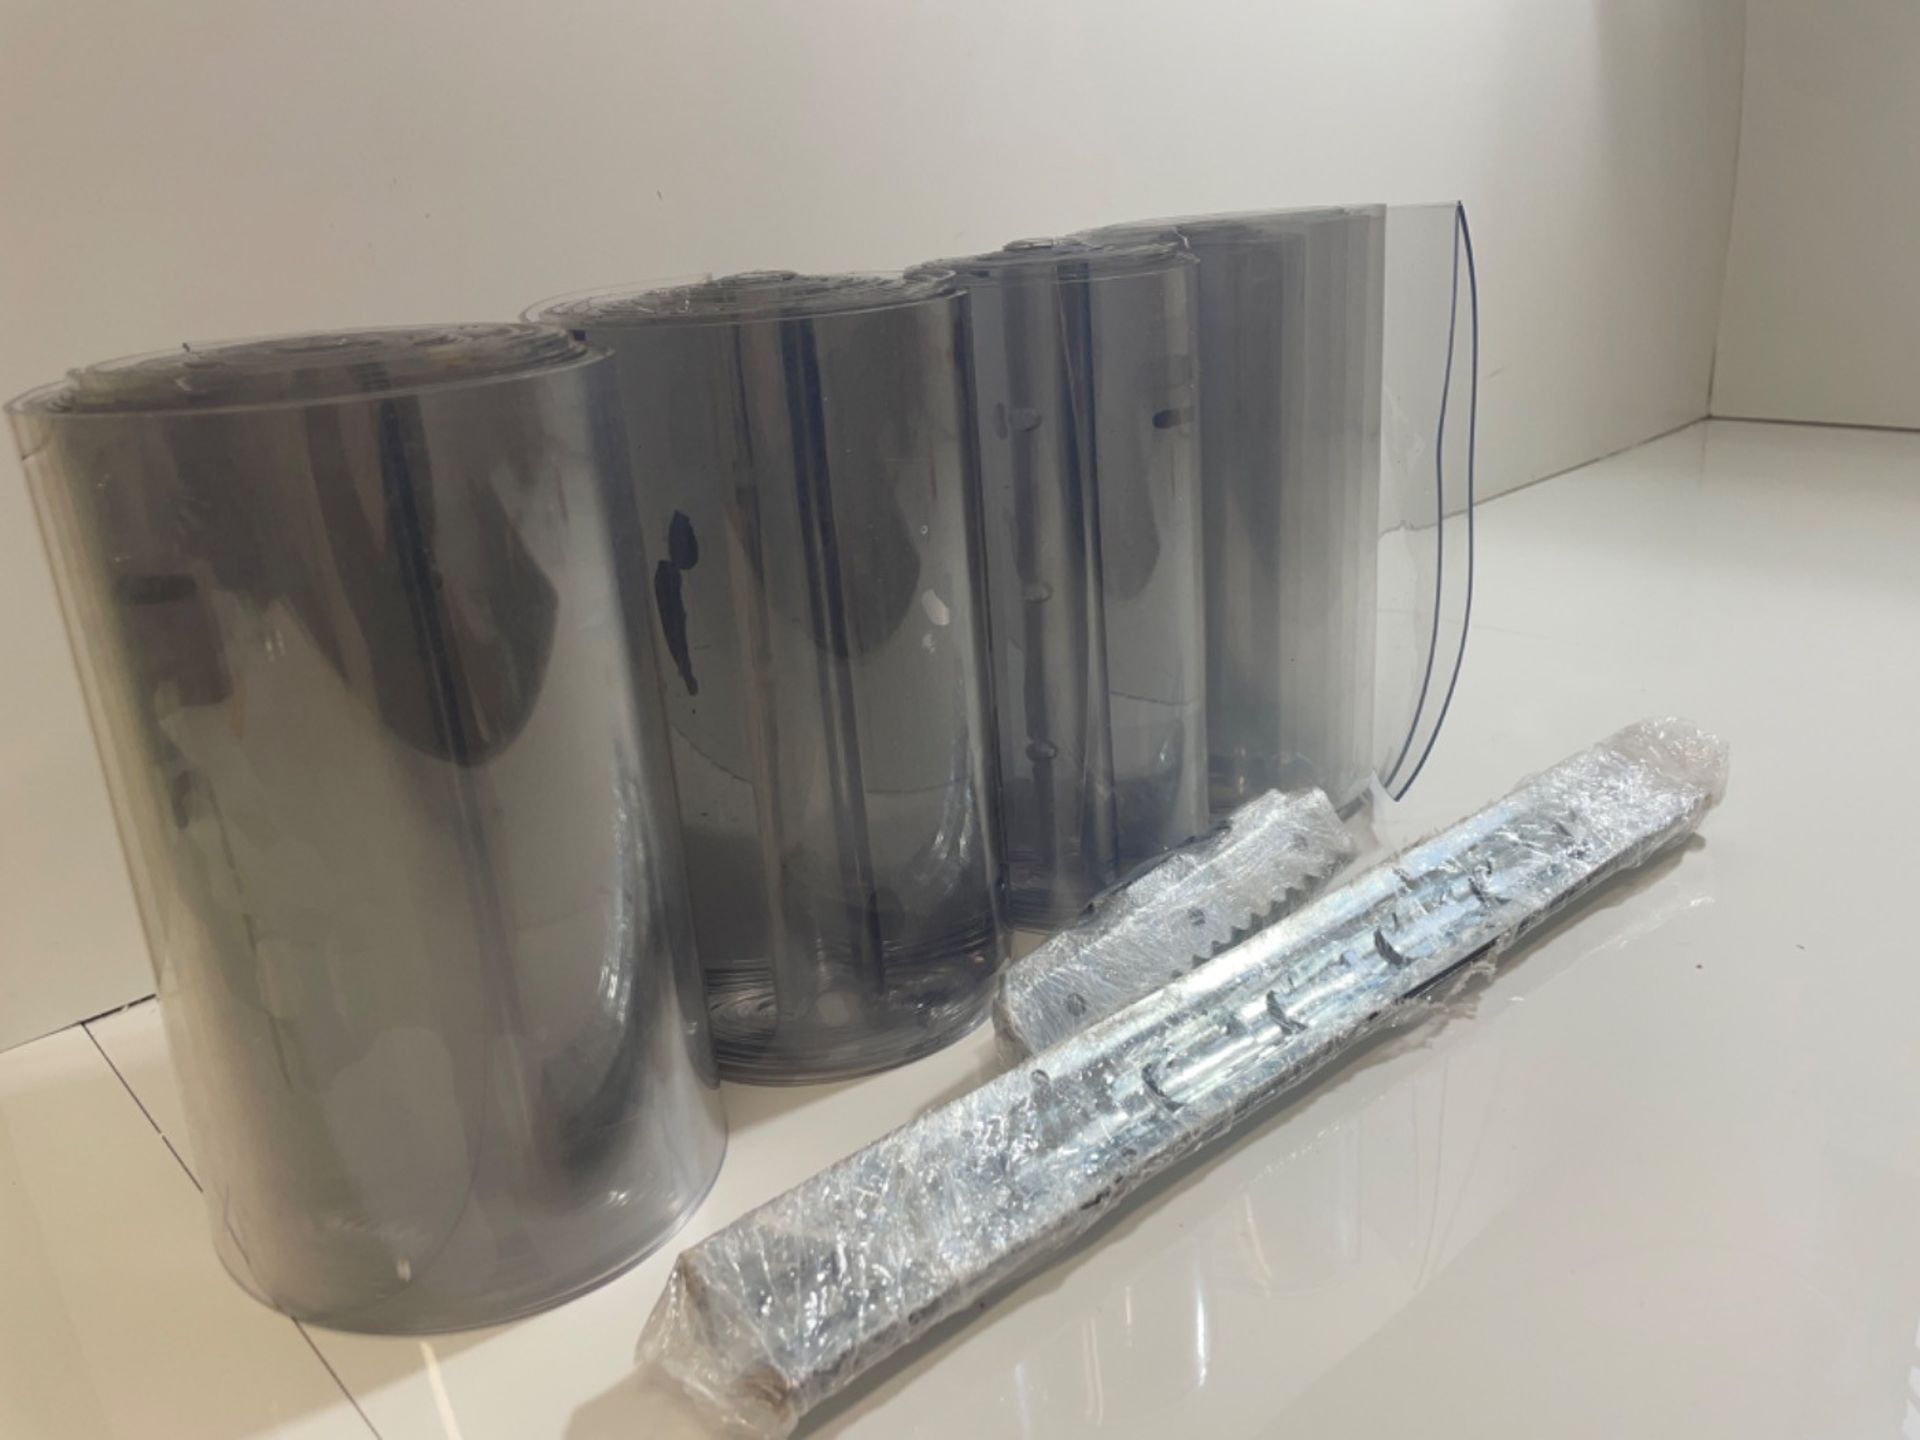 Kokey-xy Transparent PVC Curtain/Door Strip Kit for Freezer Room - 1.5m x 2m x 2mm (20cm x 10pcs) - Image 3 of 3